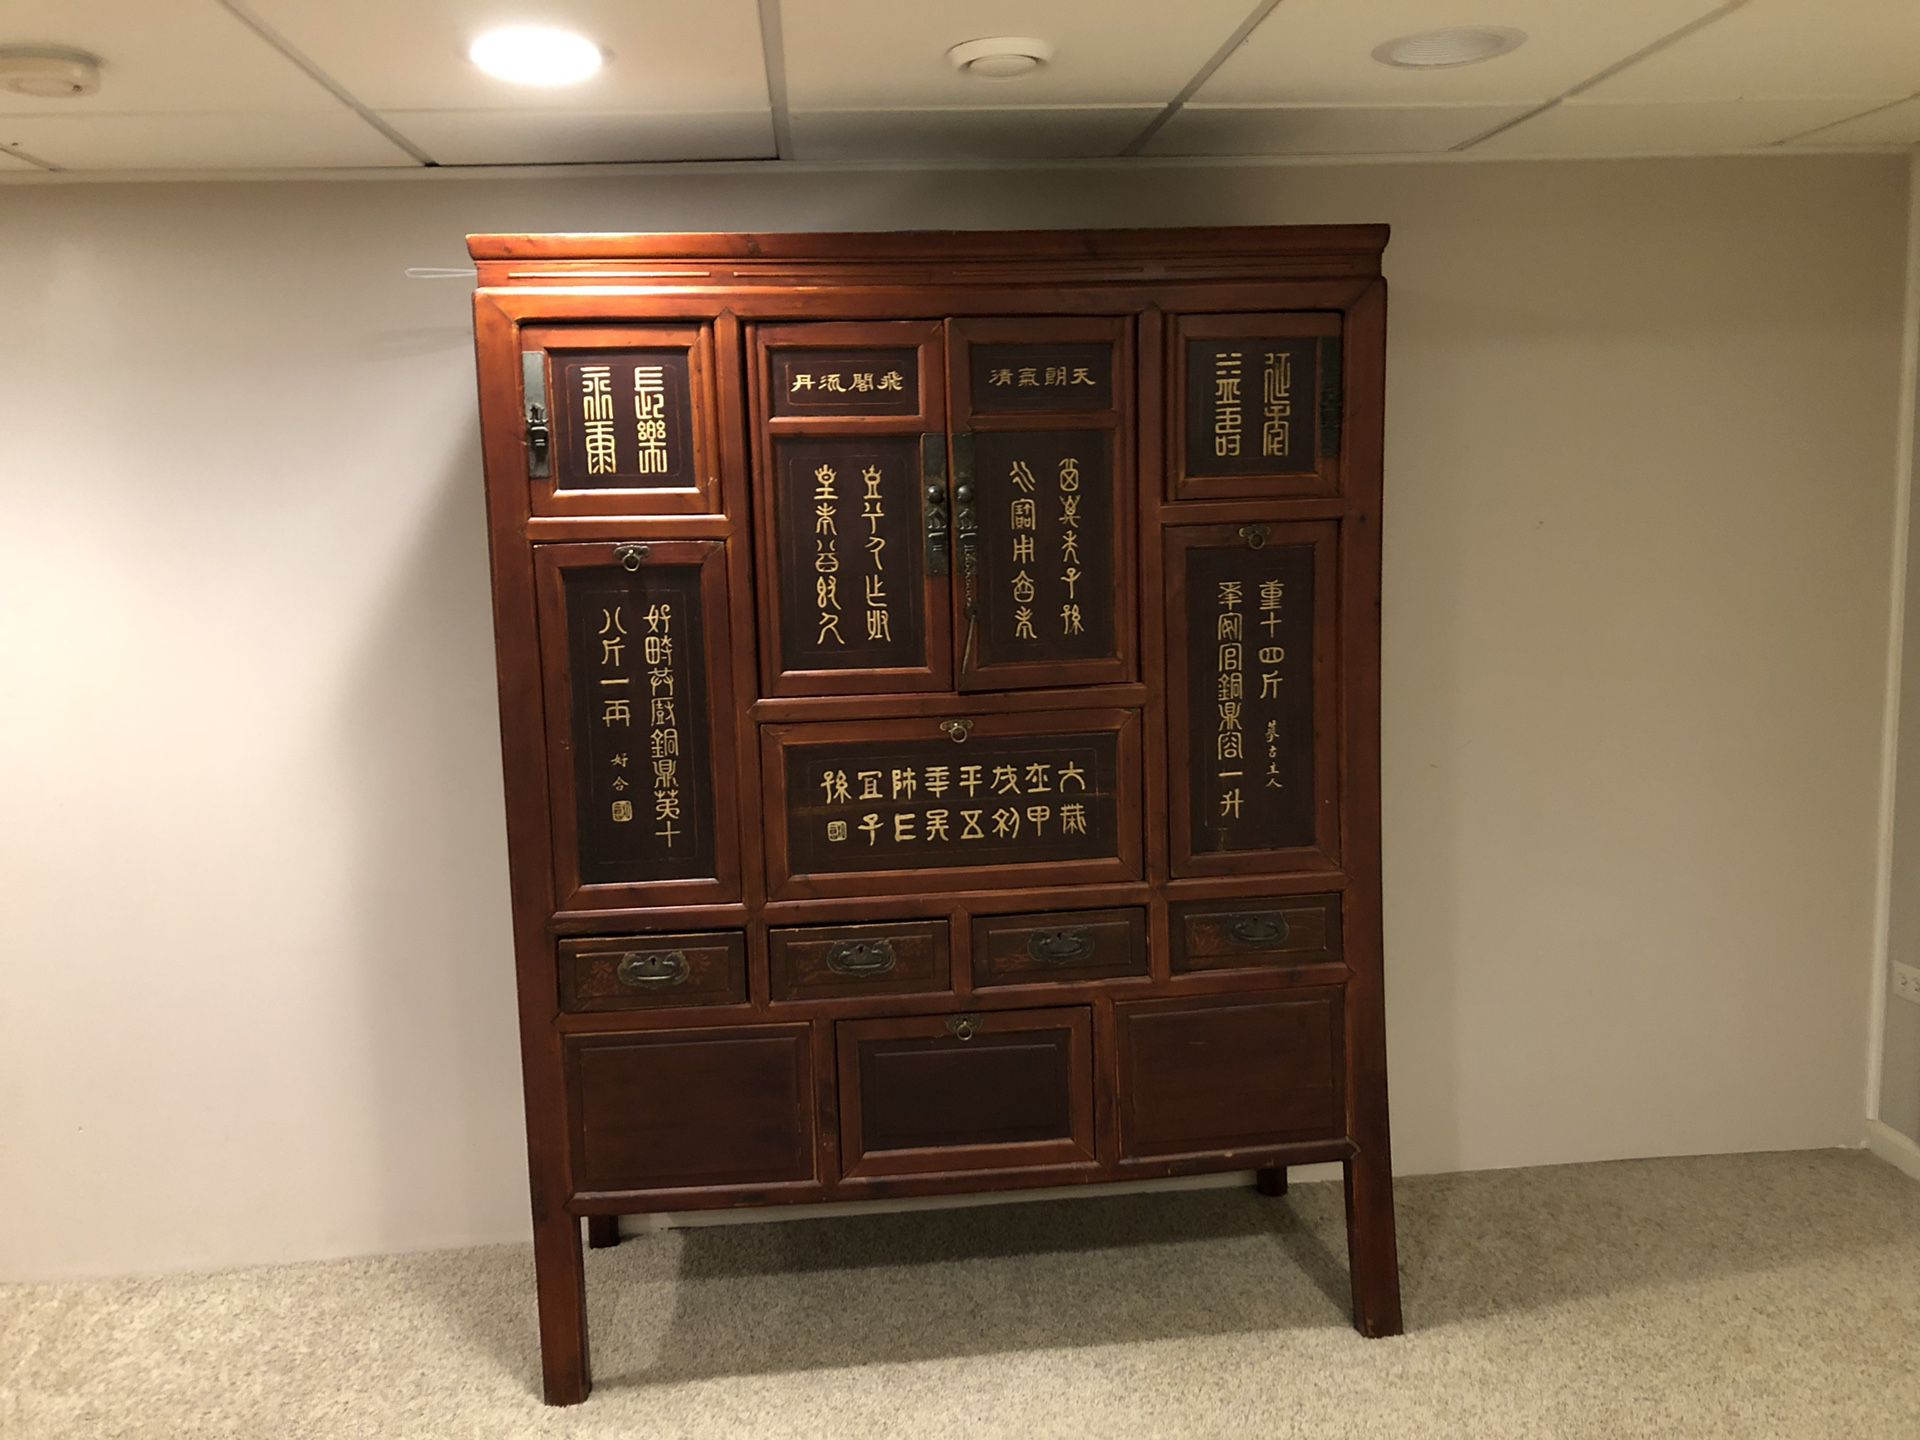 Antique china cabinet